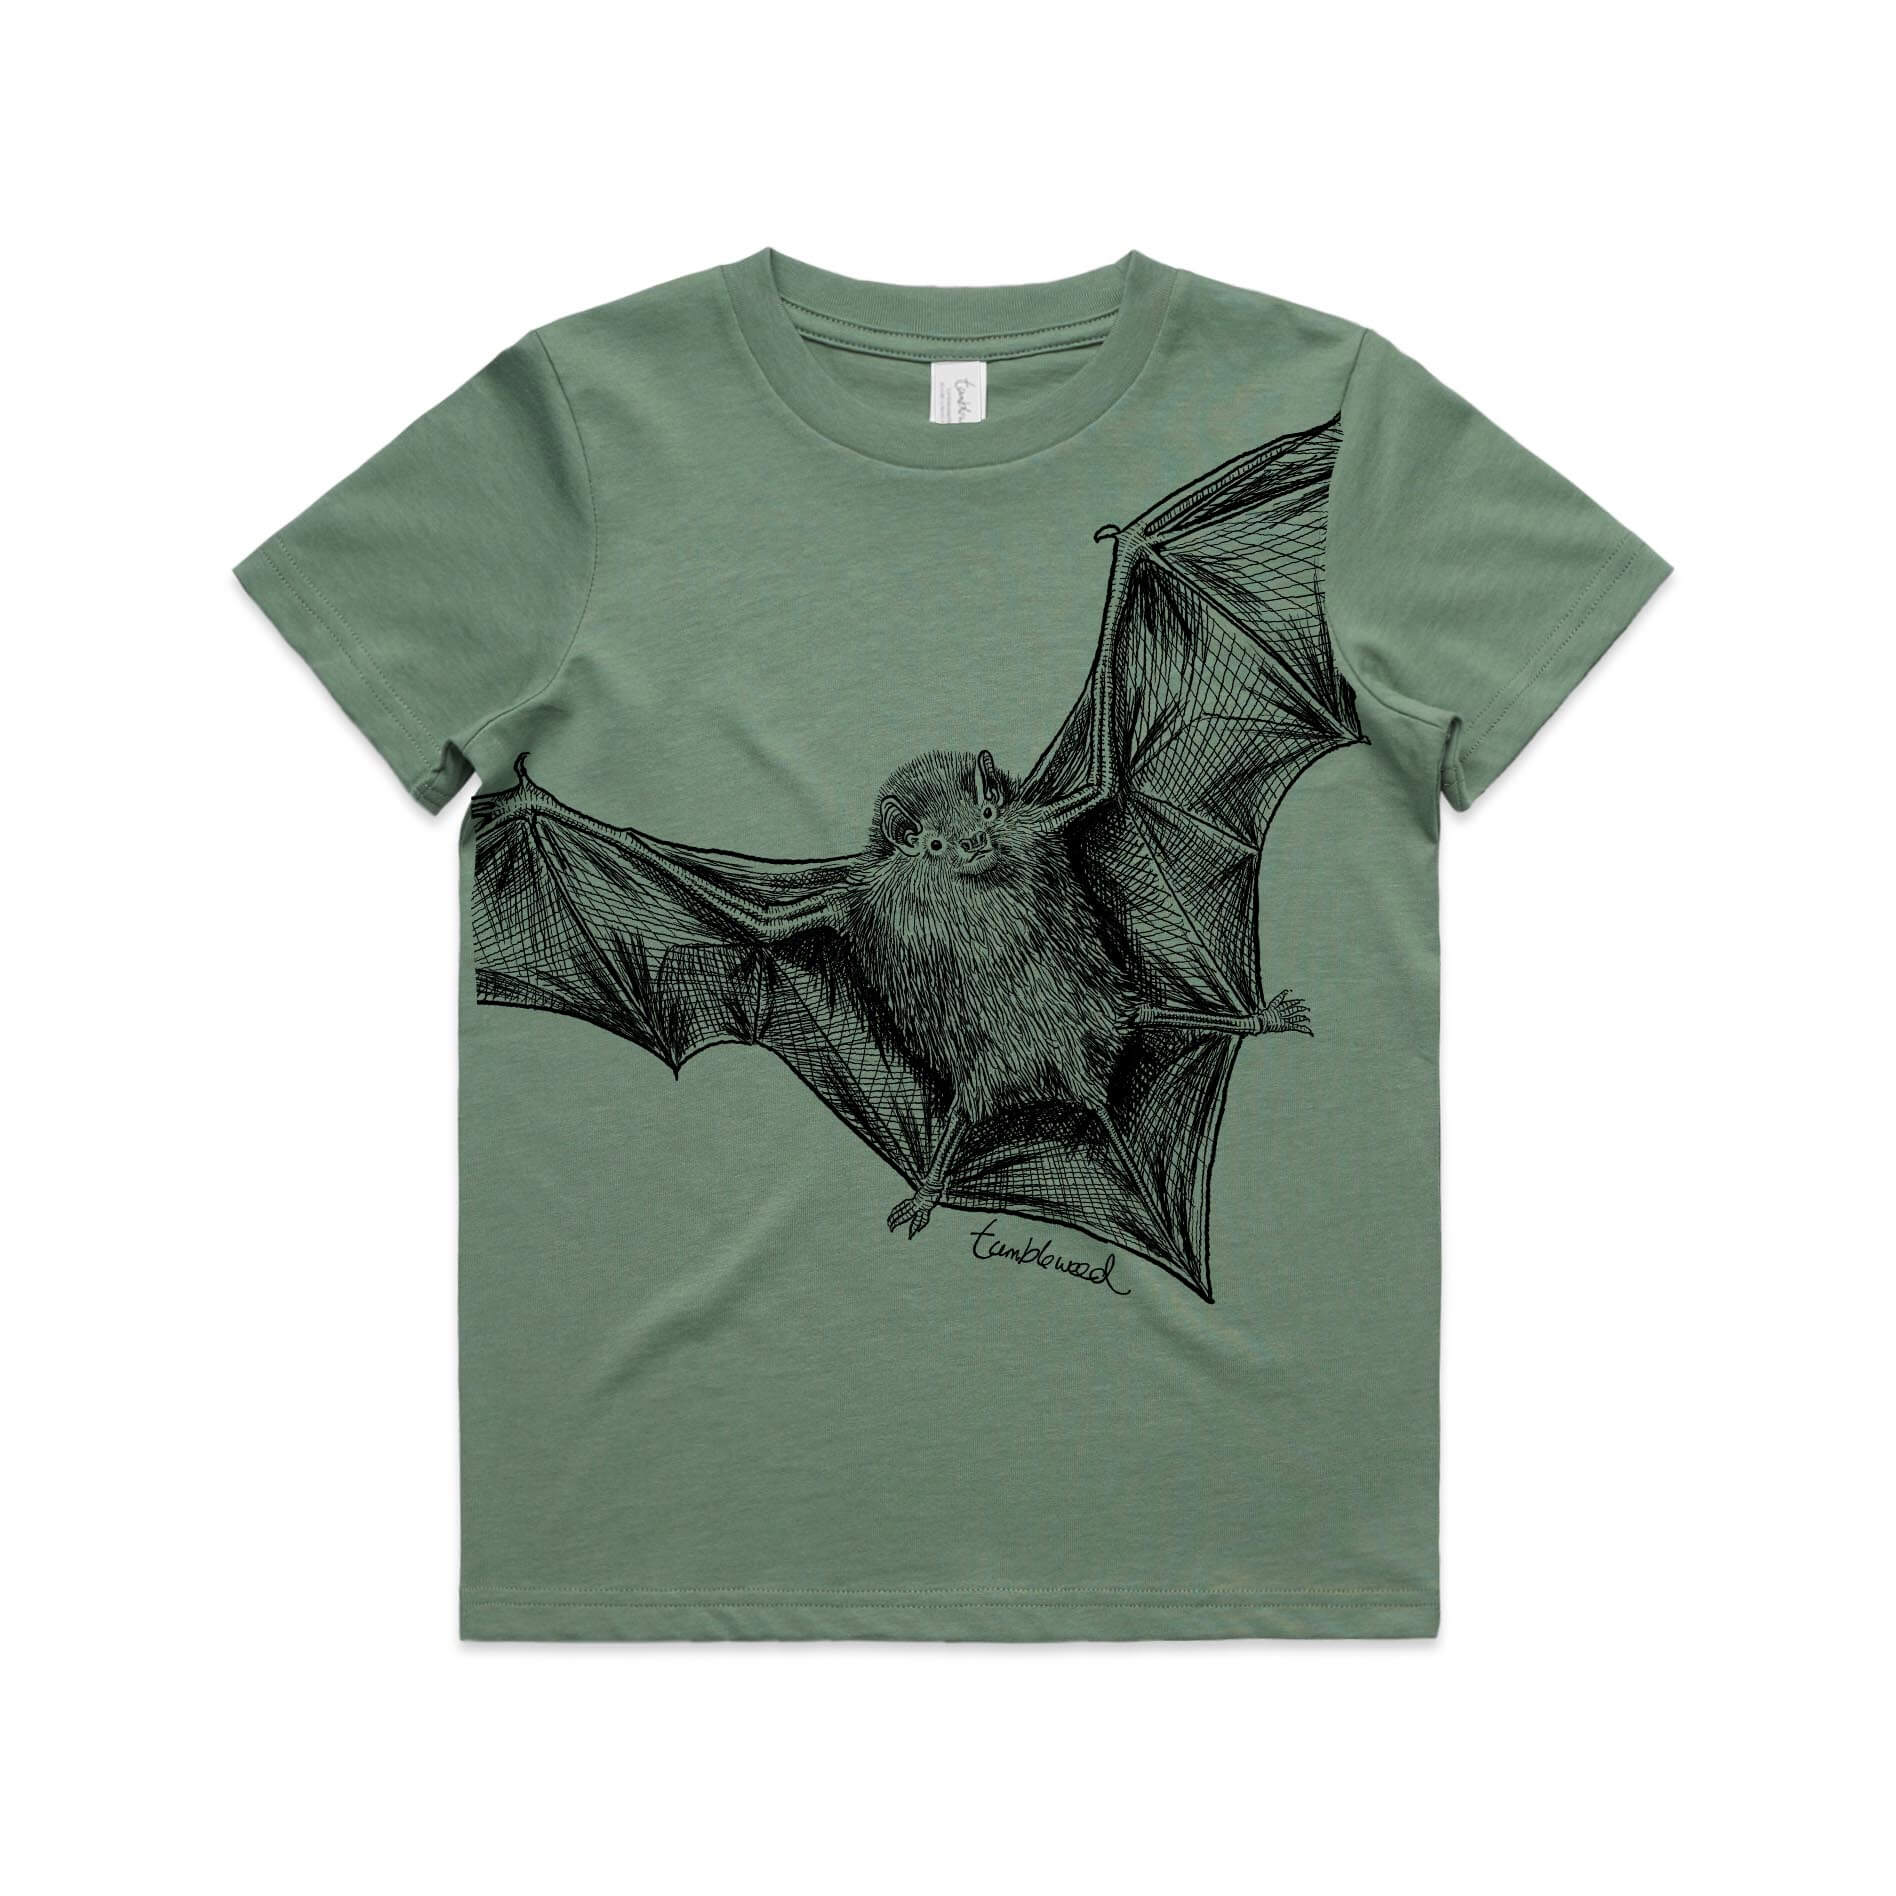 Sage, cotton kids' t-shirt with screen printed Kids bat design.